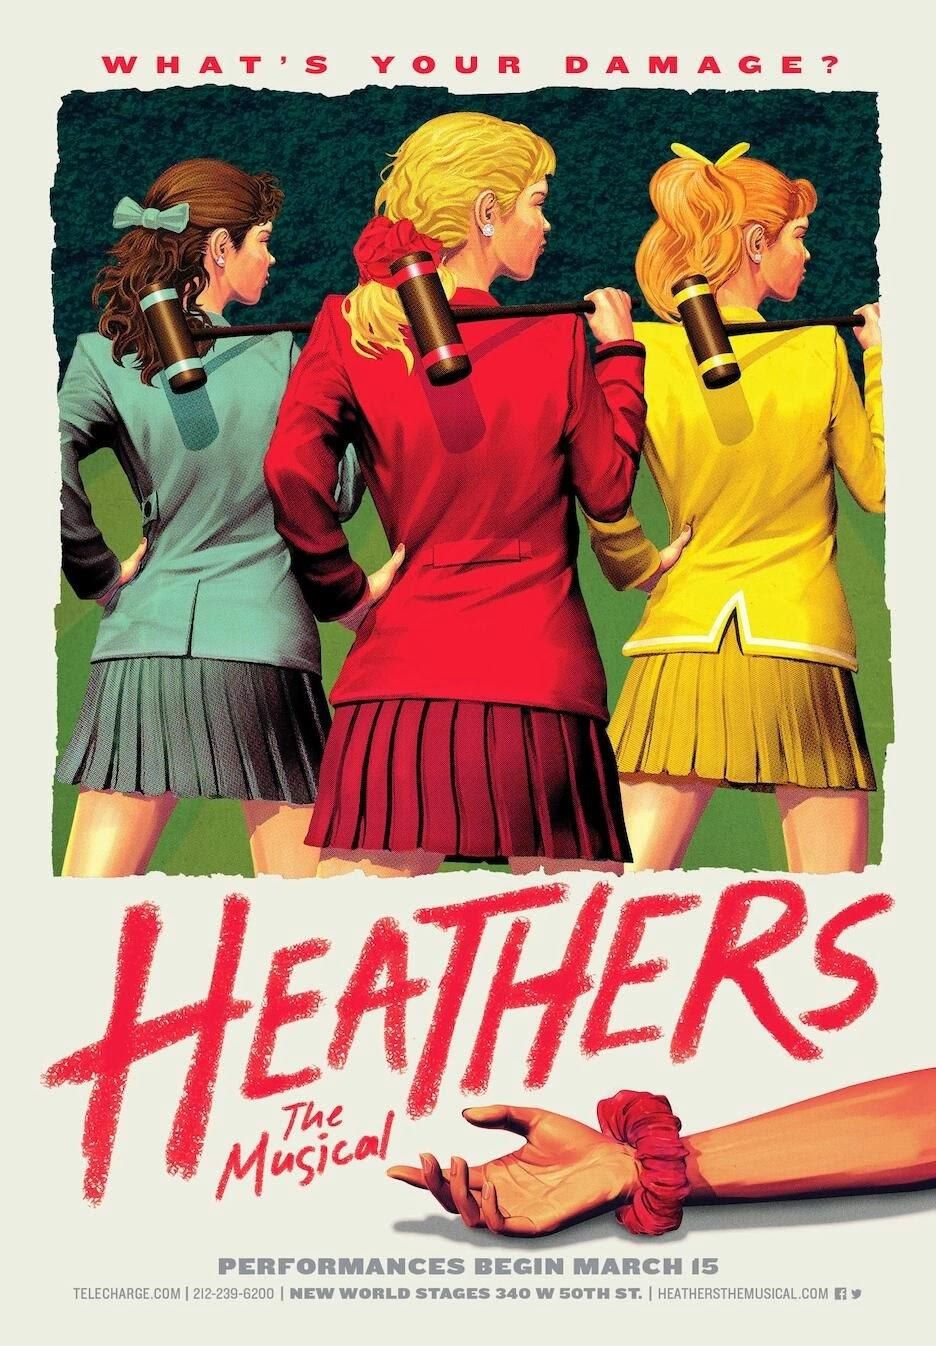 heathers wallpaper,poster,vintage advertisement,uniform,advertising,retro style